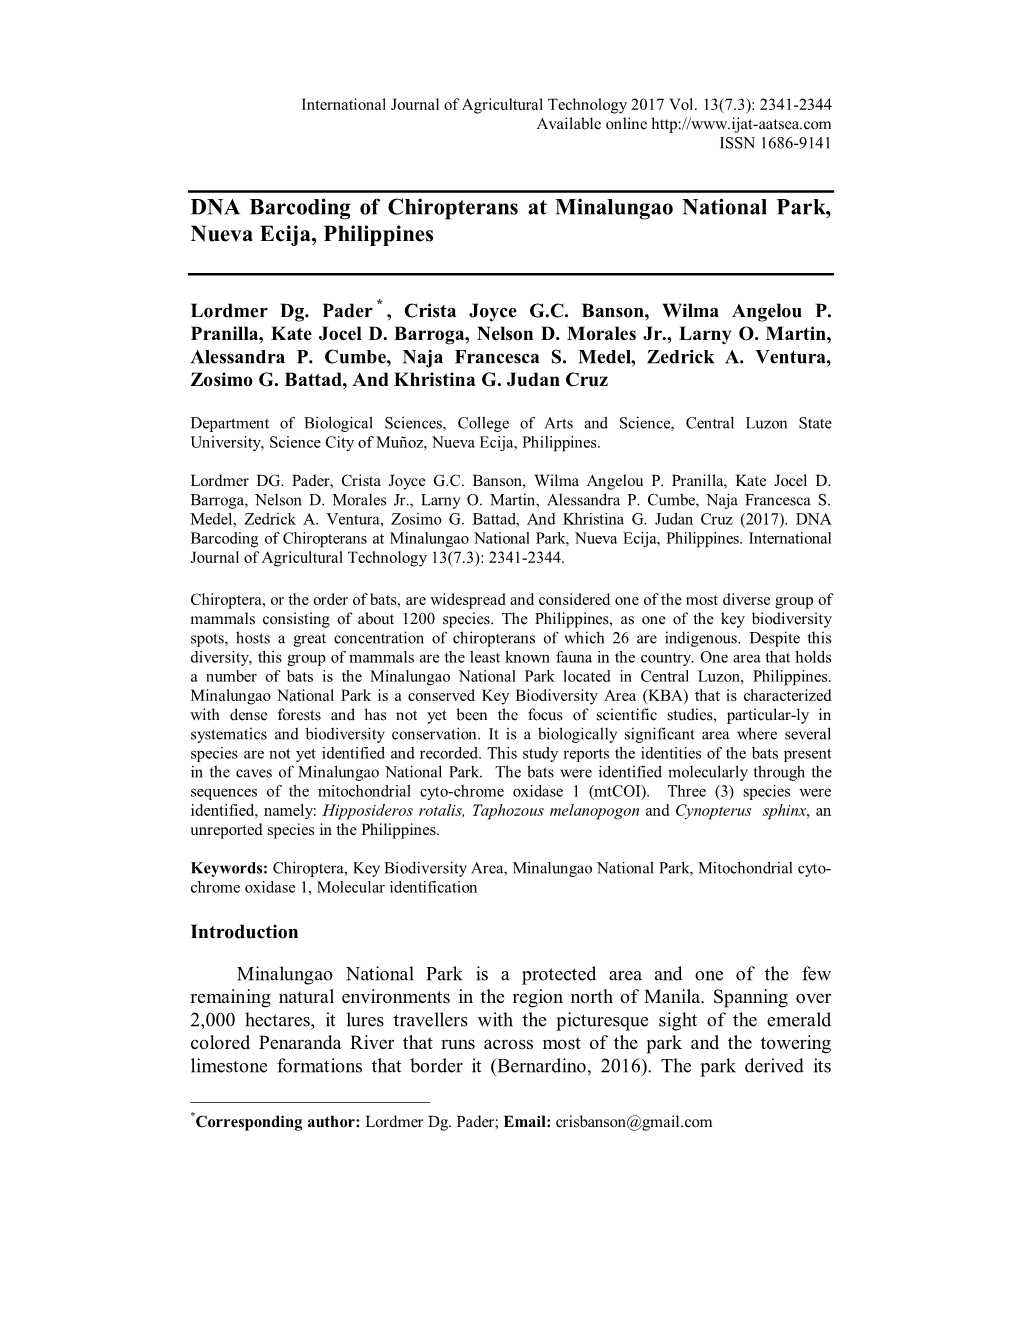 DNA Barcoding of Chiropterans at Minalungao National Park, Nueva Ecija, Philippines